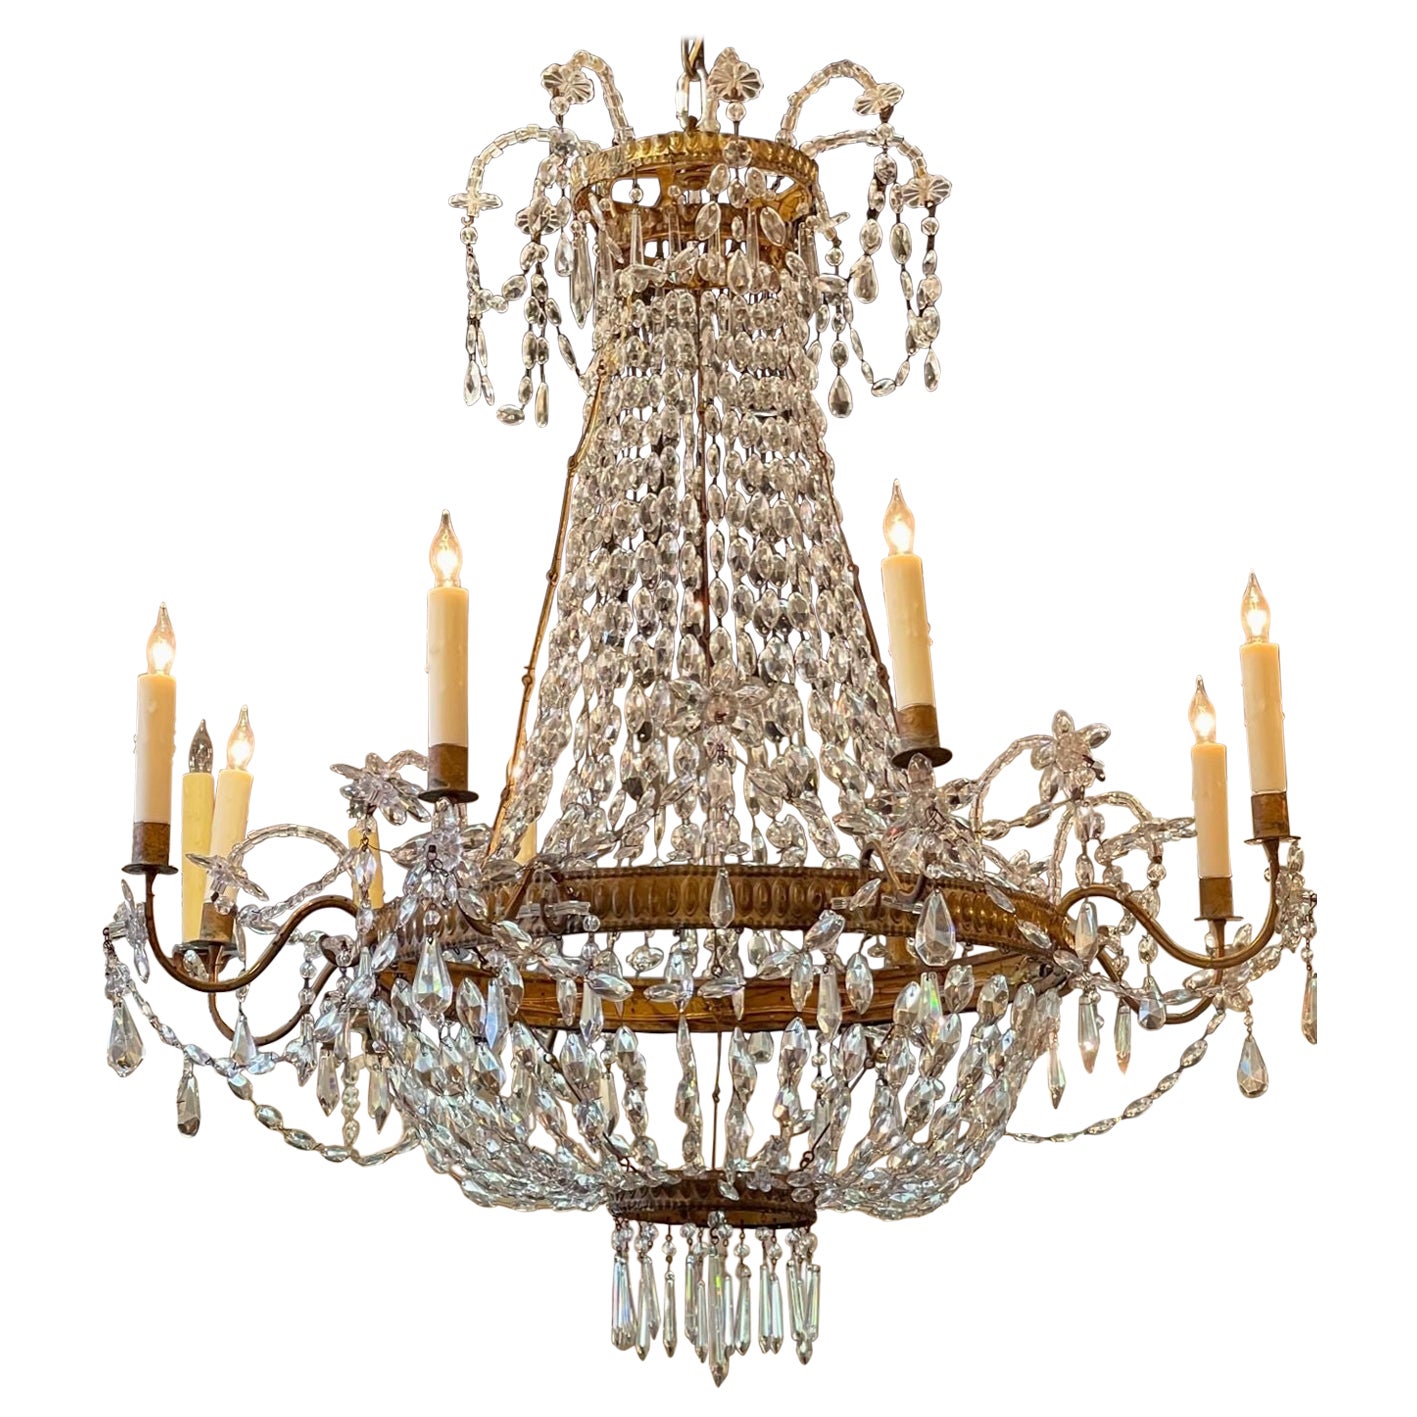 English georgian crystal and brass chandelier